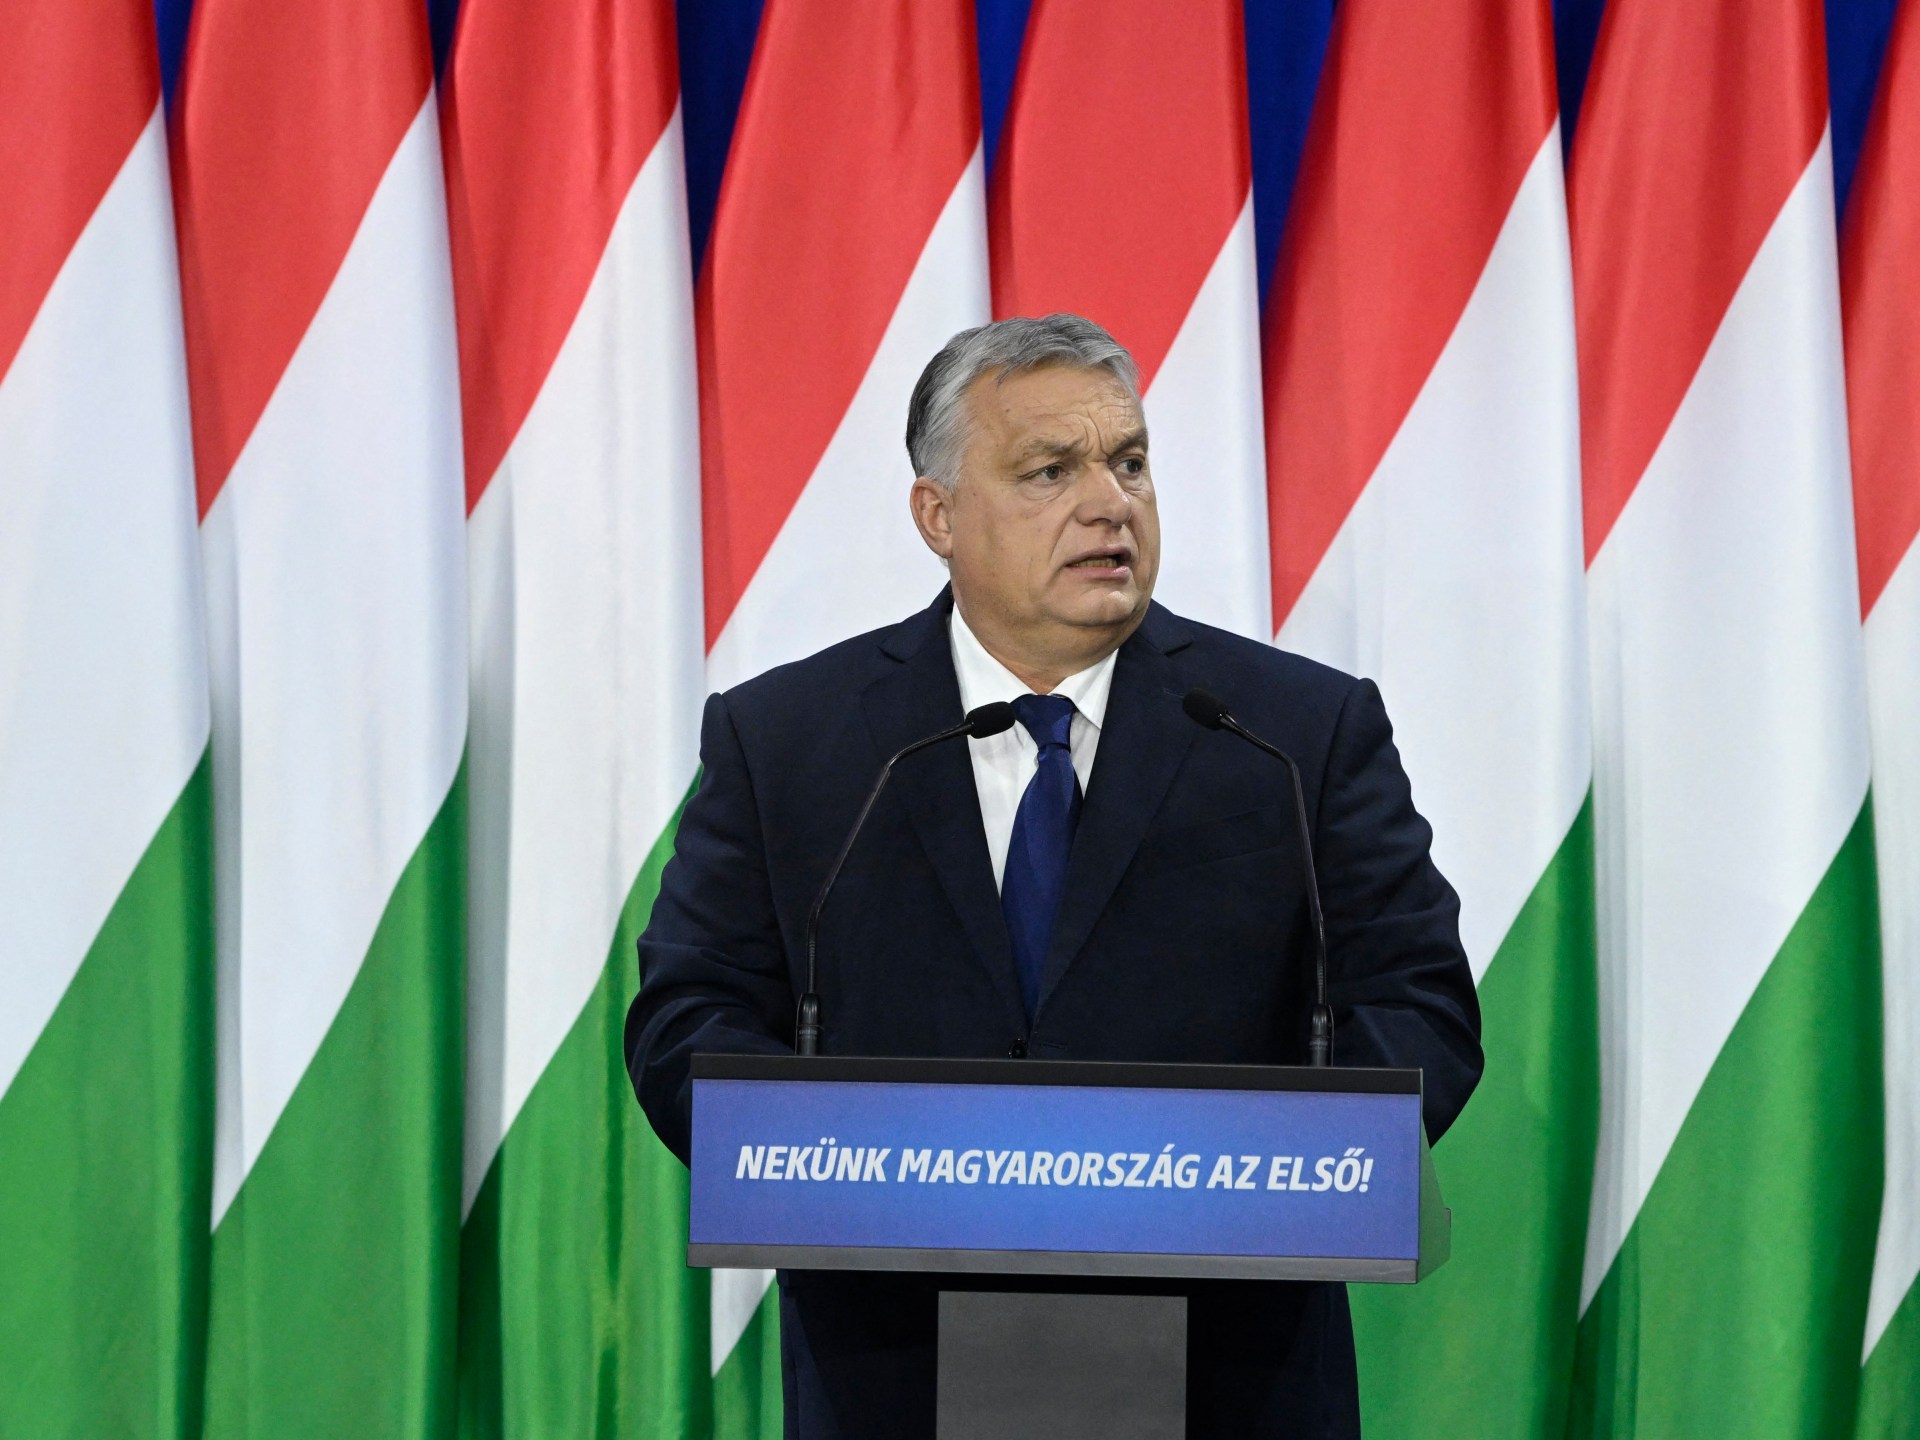 ‘Patriots for Europe’: Hungary’s Orban announces new EU Parliament alliance | European Union News